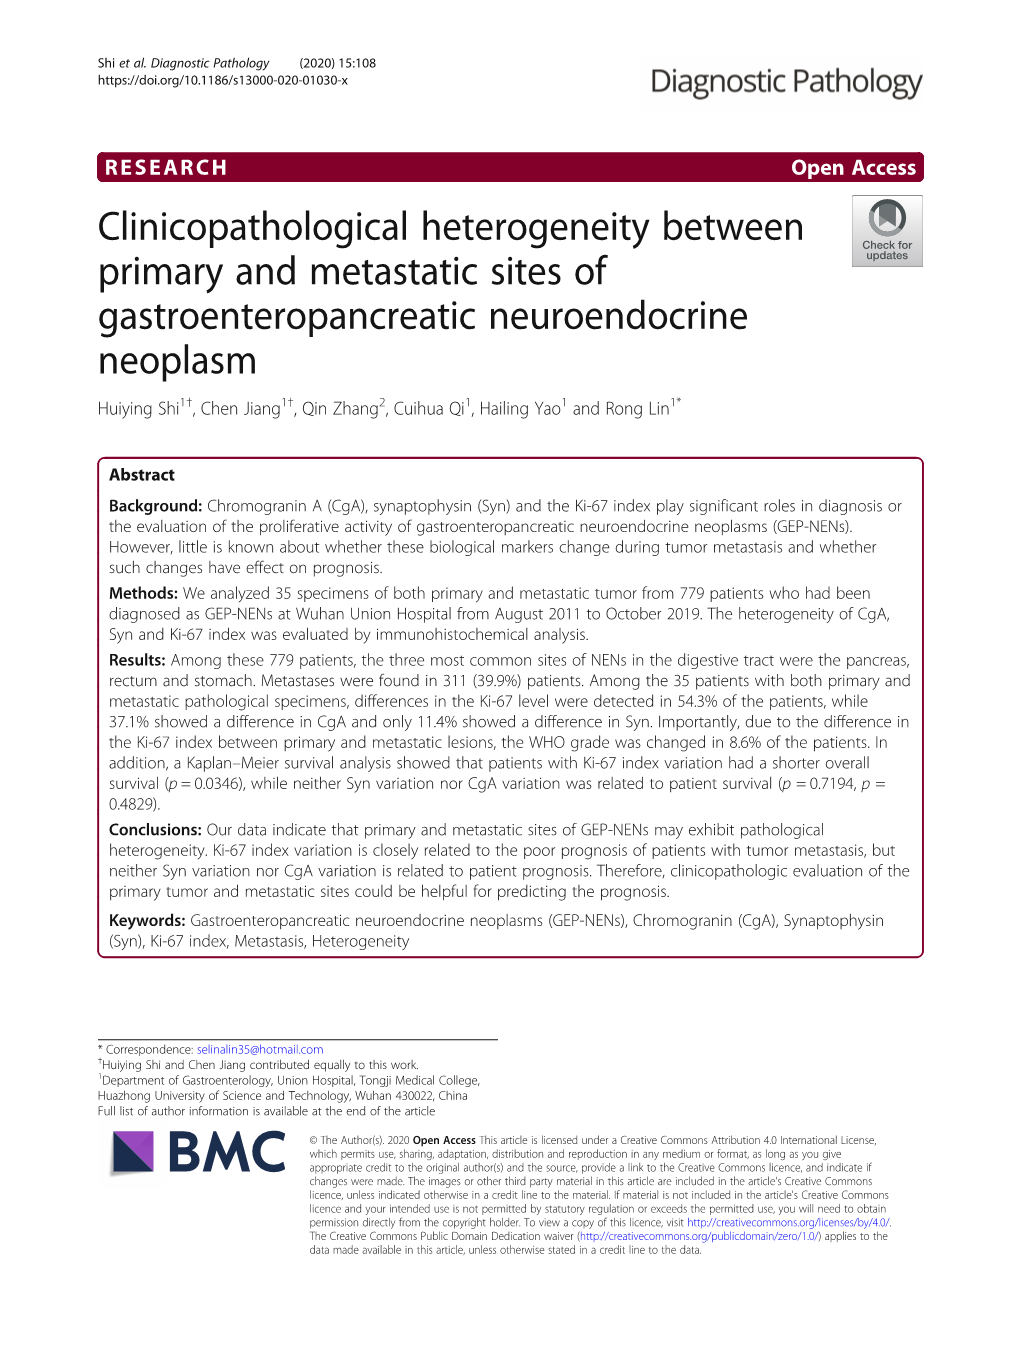 Clinicopathological Heterogeneity Between Primary and Metastatic